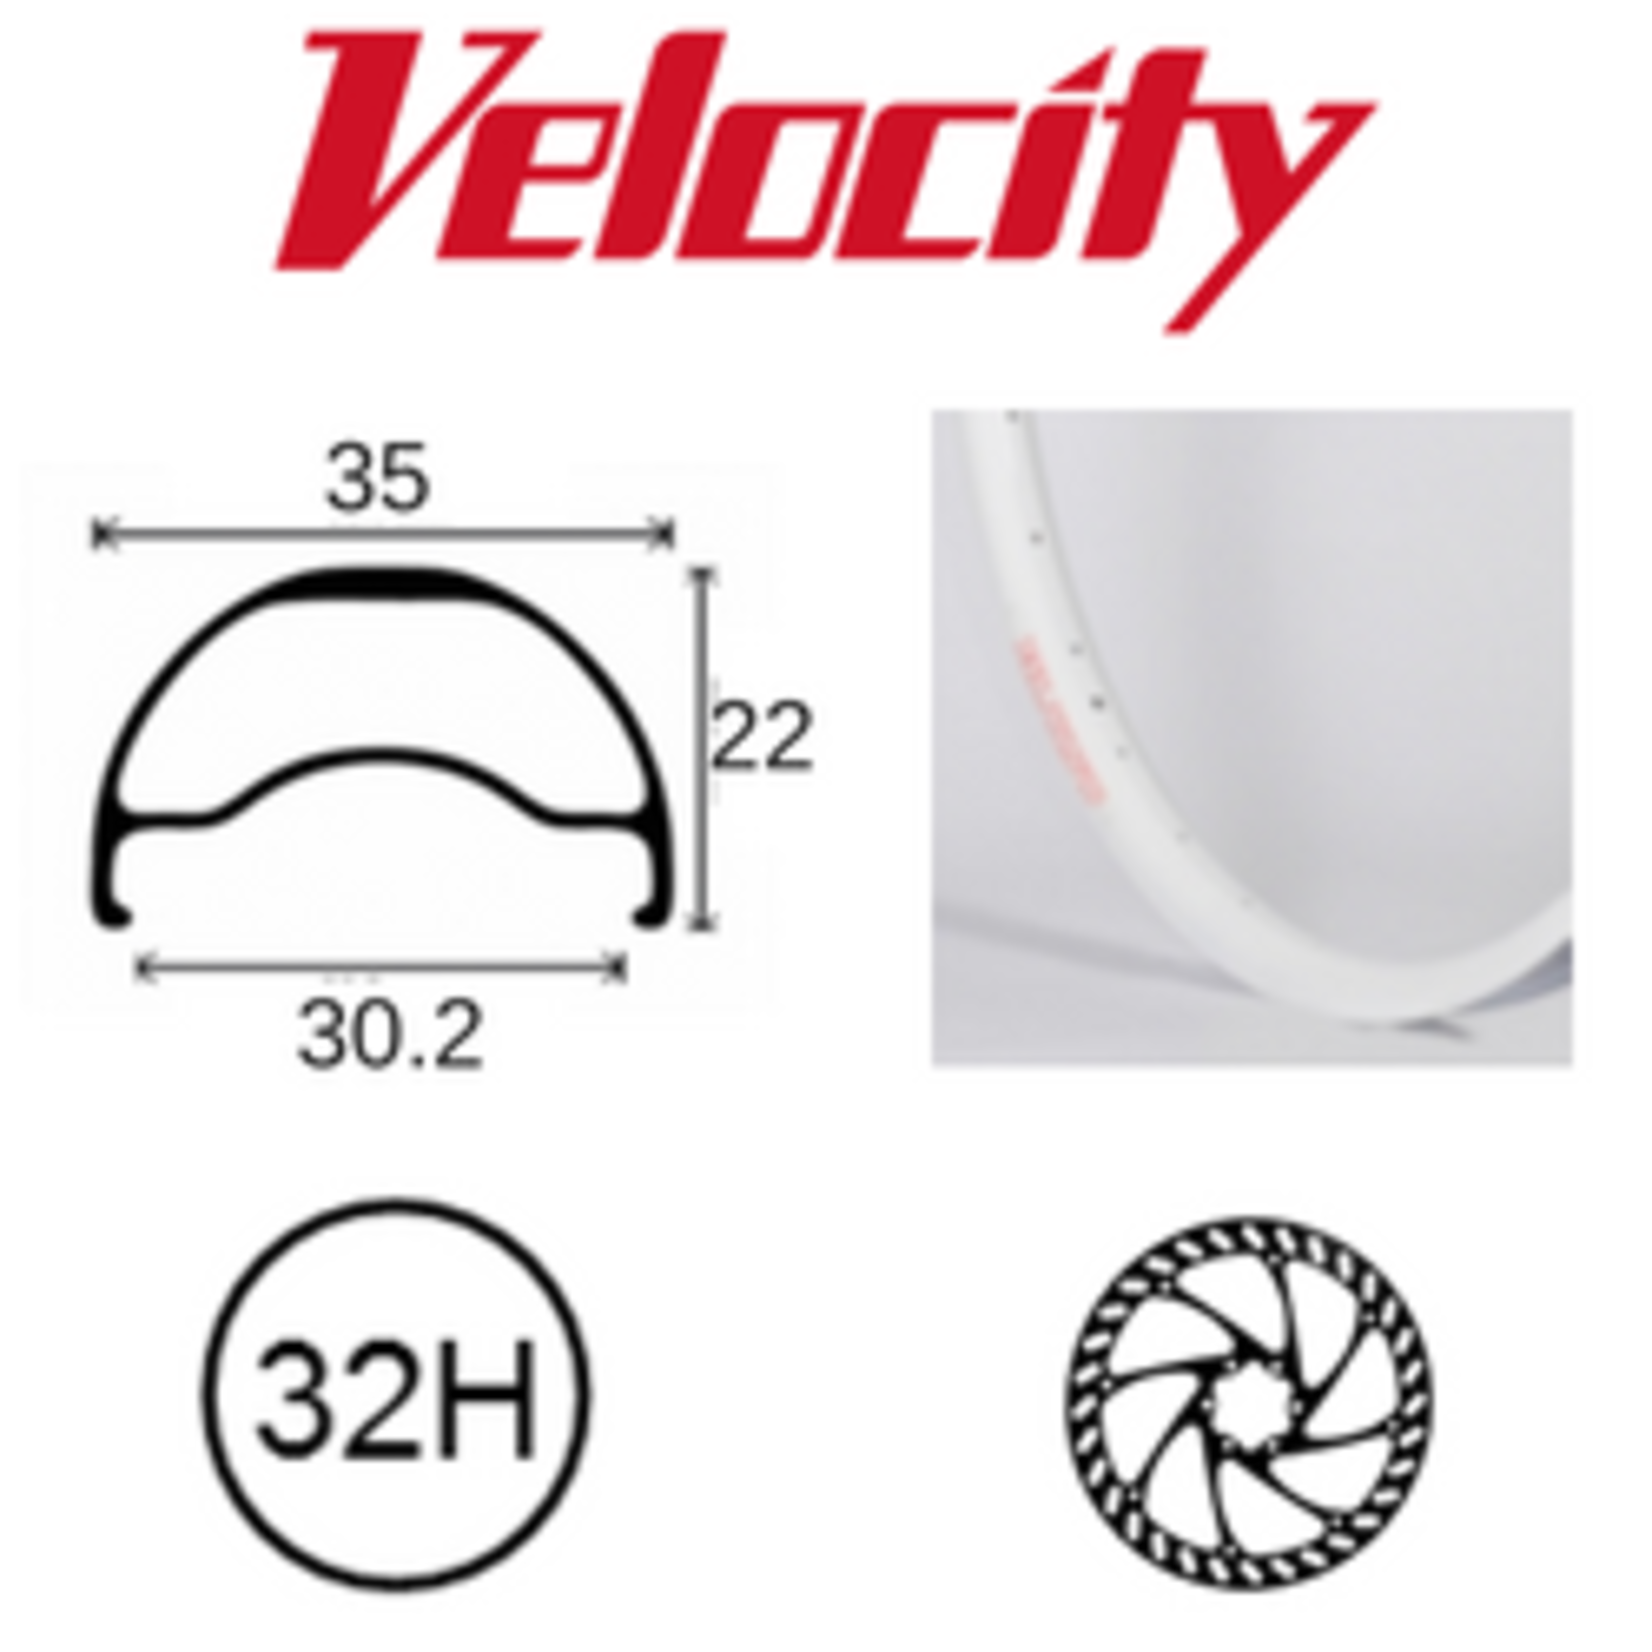 velocity Velocity Rim - Blunt 35- 700C (622) 32H - White